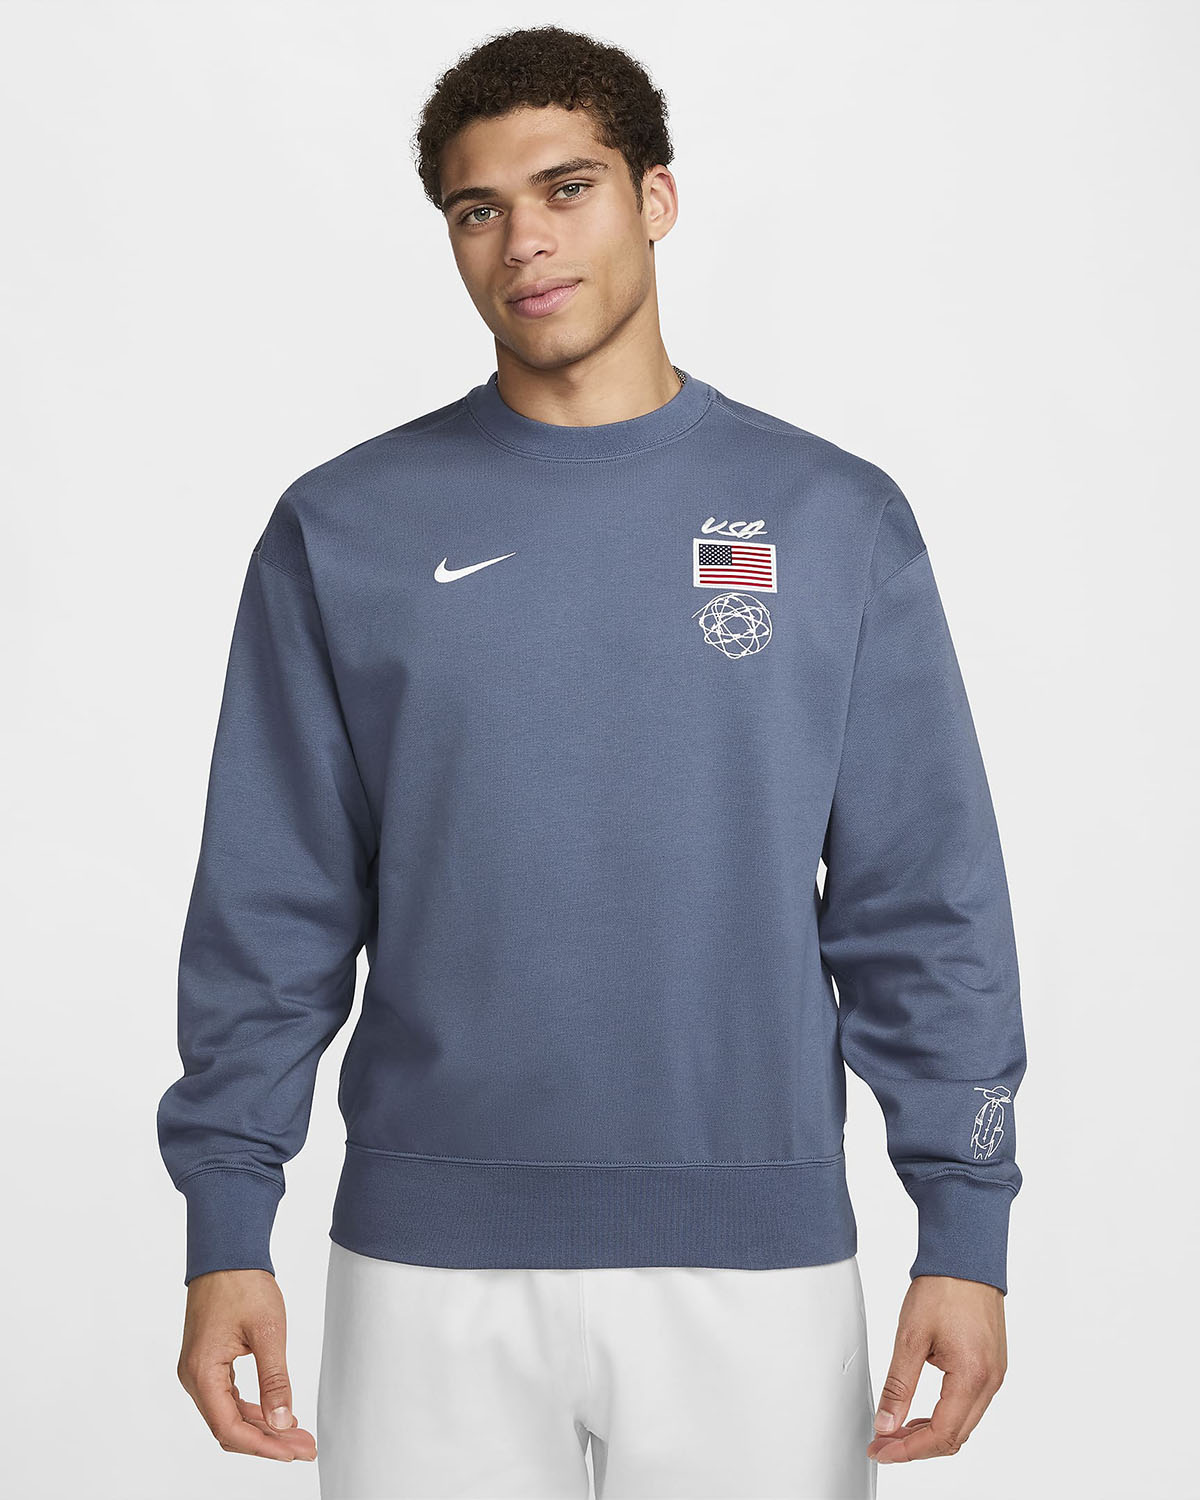 NIke USA Breaking Sweatshirt Diffused Blue